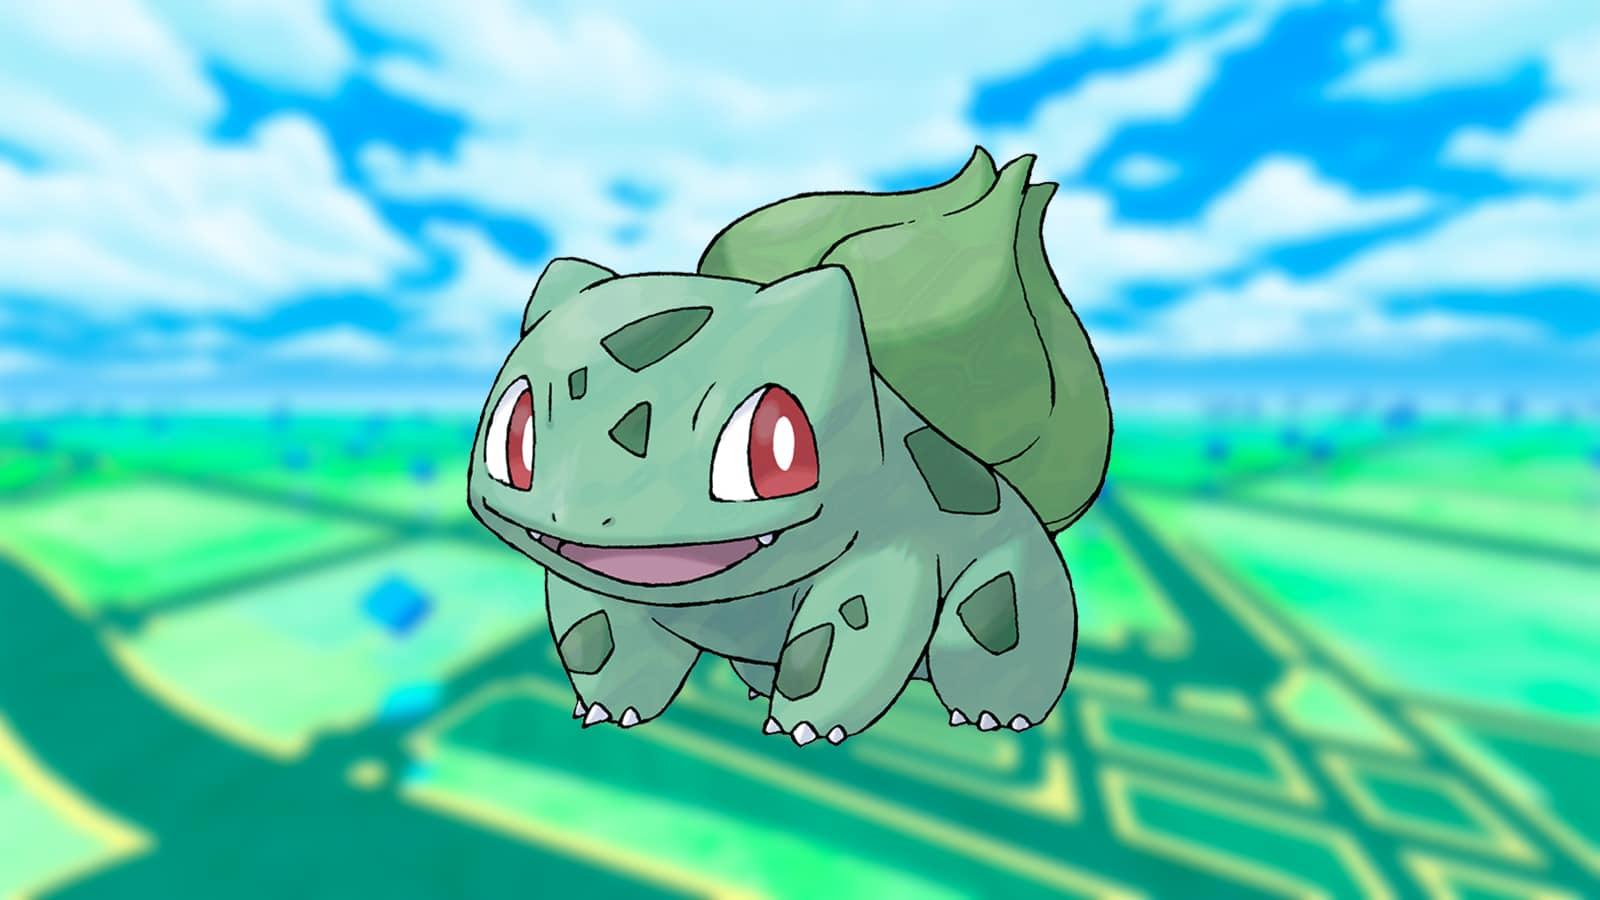 Pokémon Go' Shiny Bulbasaur: Niantic Twitter graphic sparks